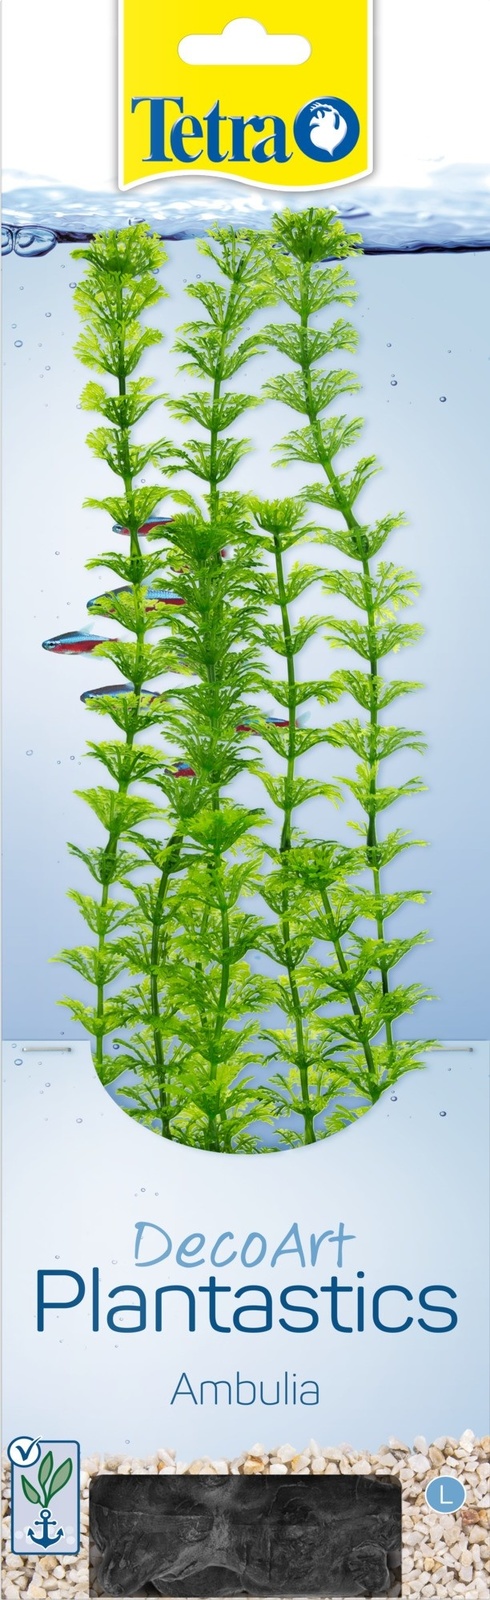 Tetra (оборудование) растение DecoArt Plantastics Ambulia 30 см (115 г)